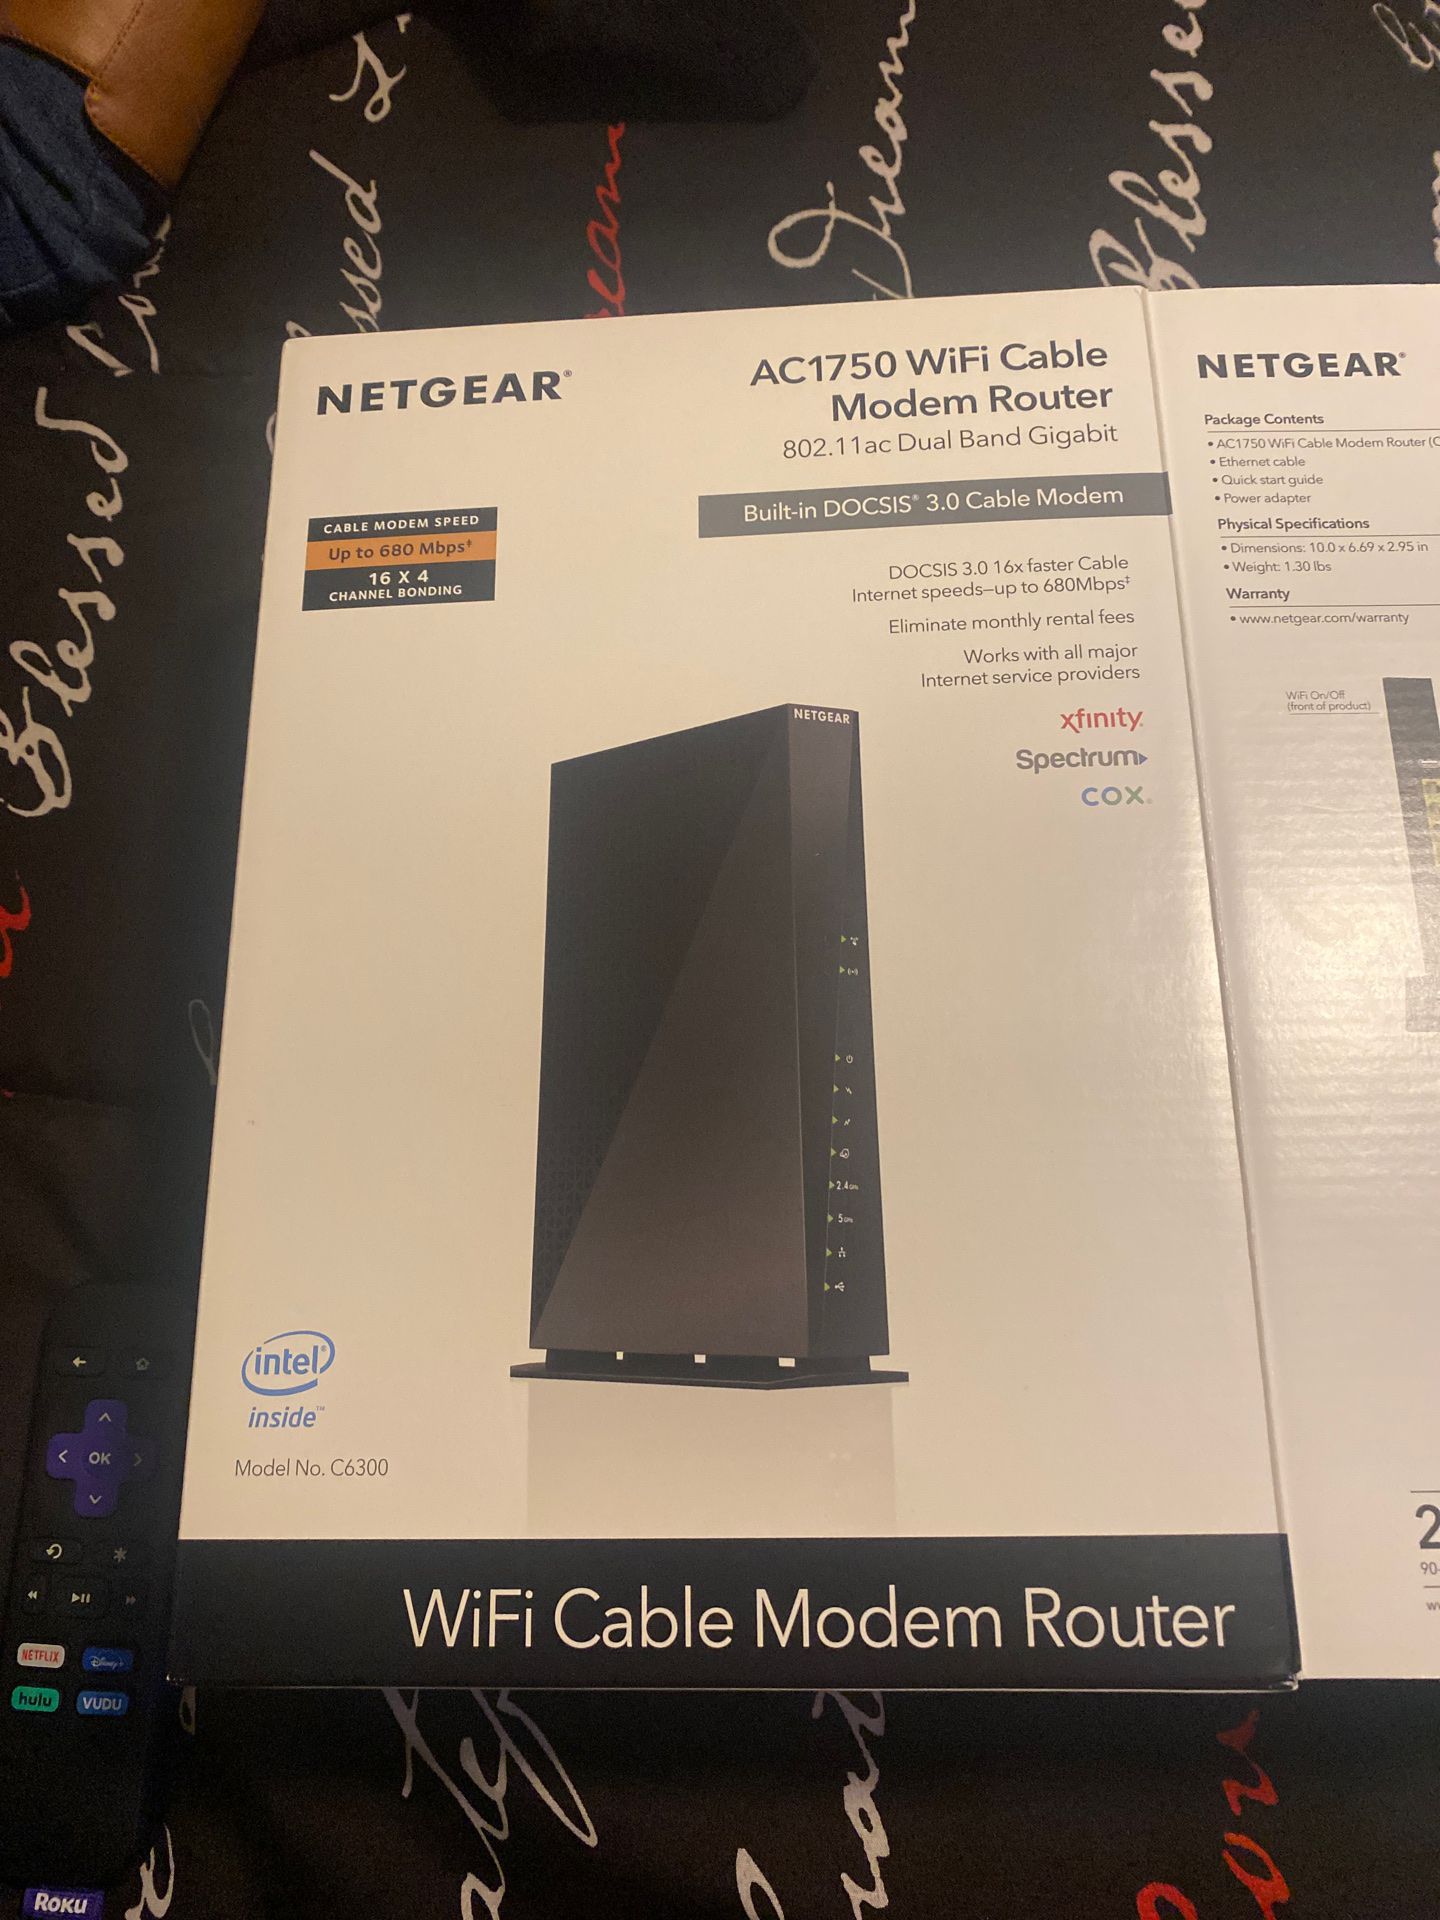 Wfi cable modem router